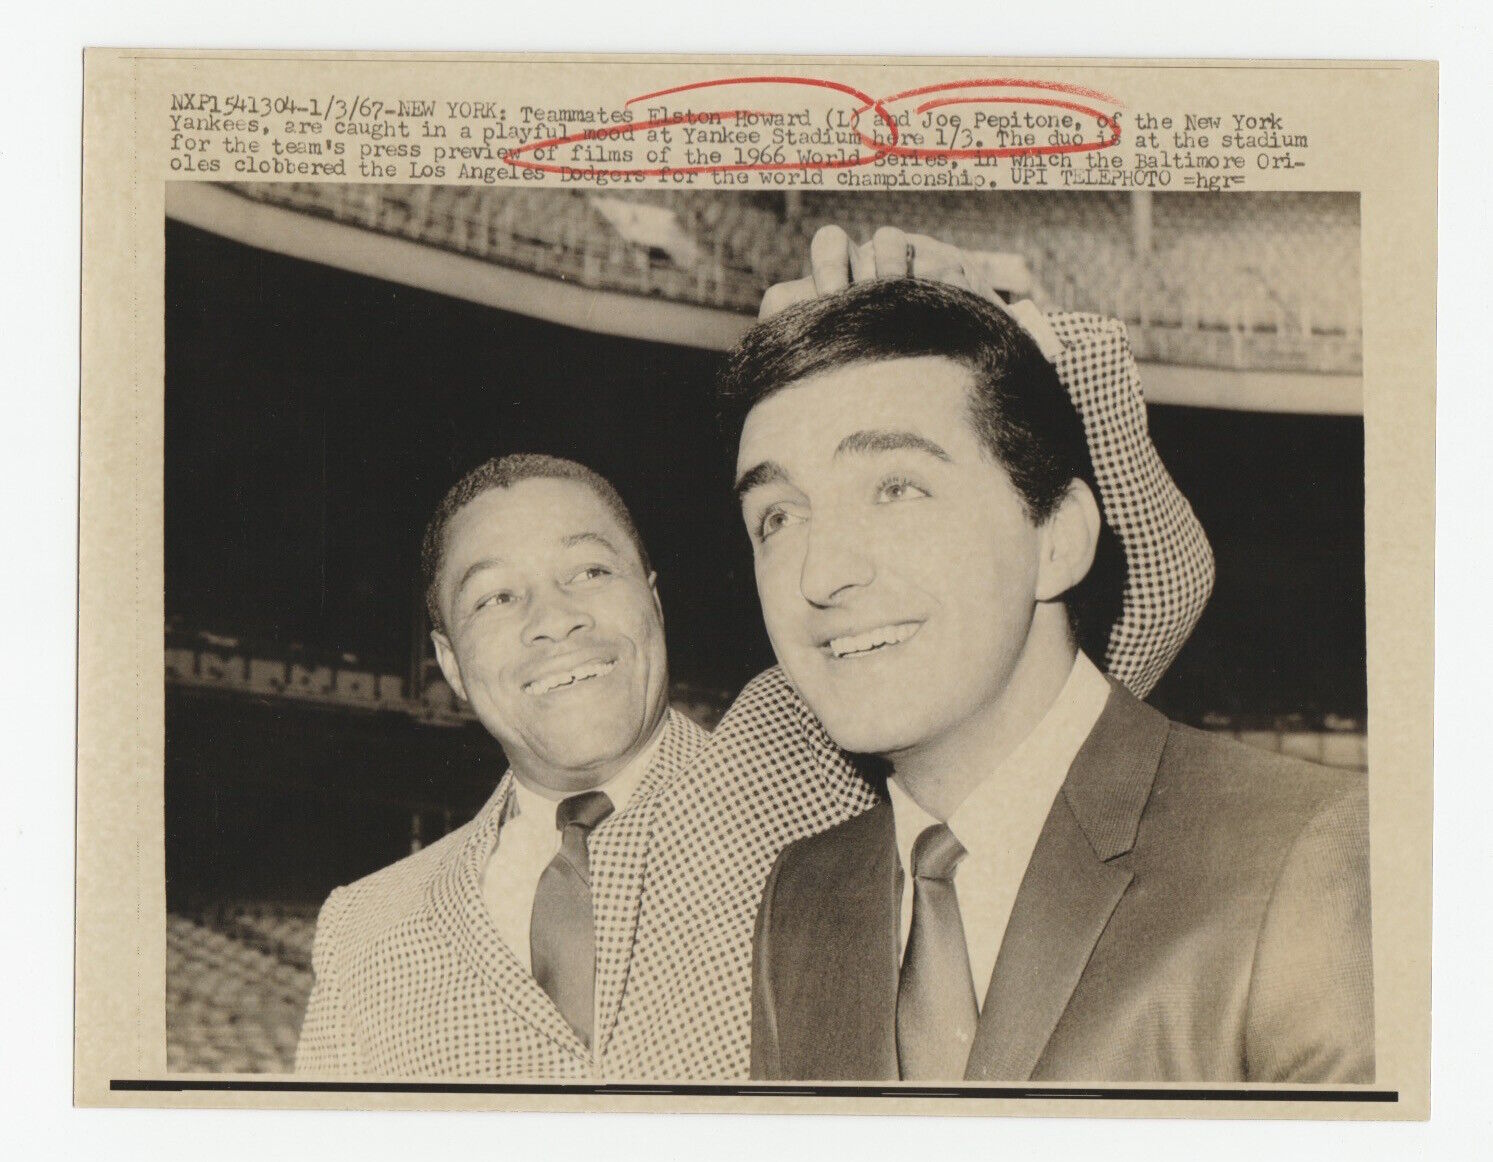 VTG Baseball Press Photo 1967 Elston Howard & Joe Pepitone New York YANKEES